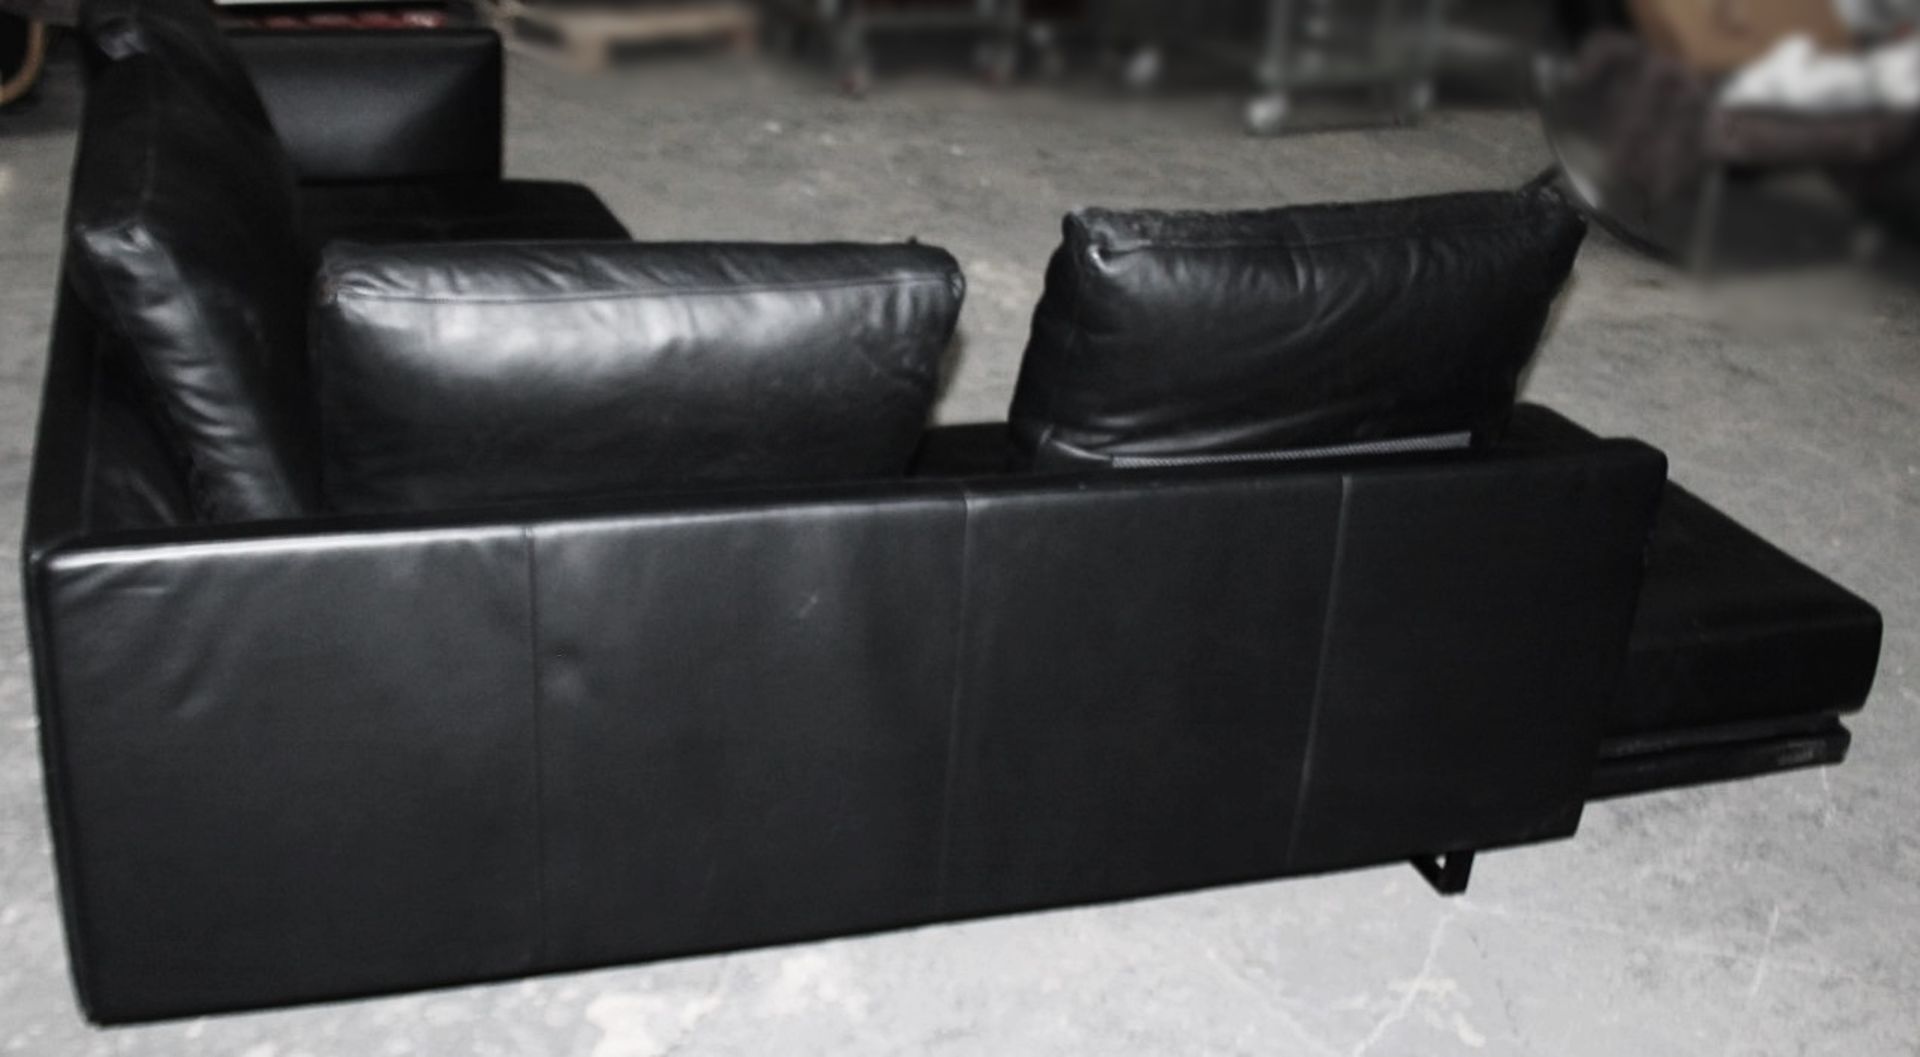 1 x WALTER KNOLL Designer Corner Sofa, Upholstered In A Soft Black Leather - Image 4 of 11